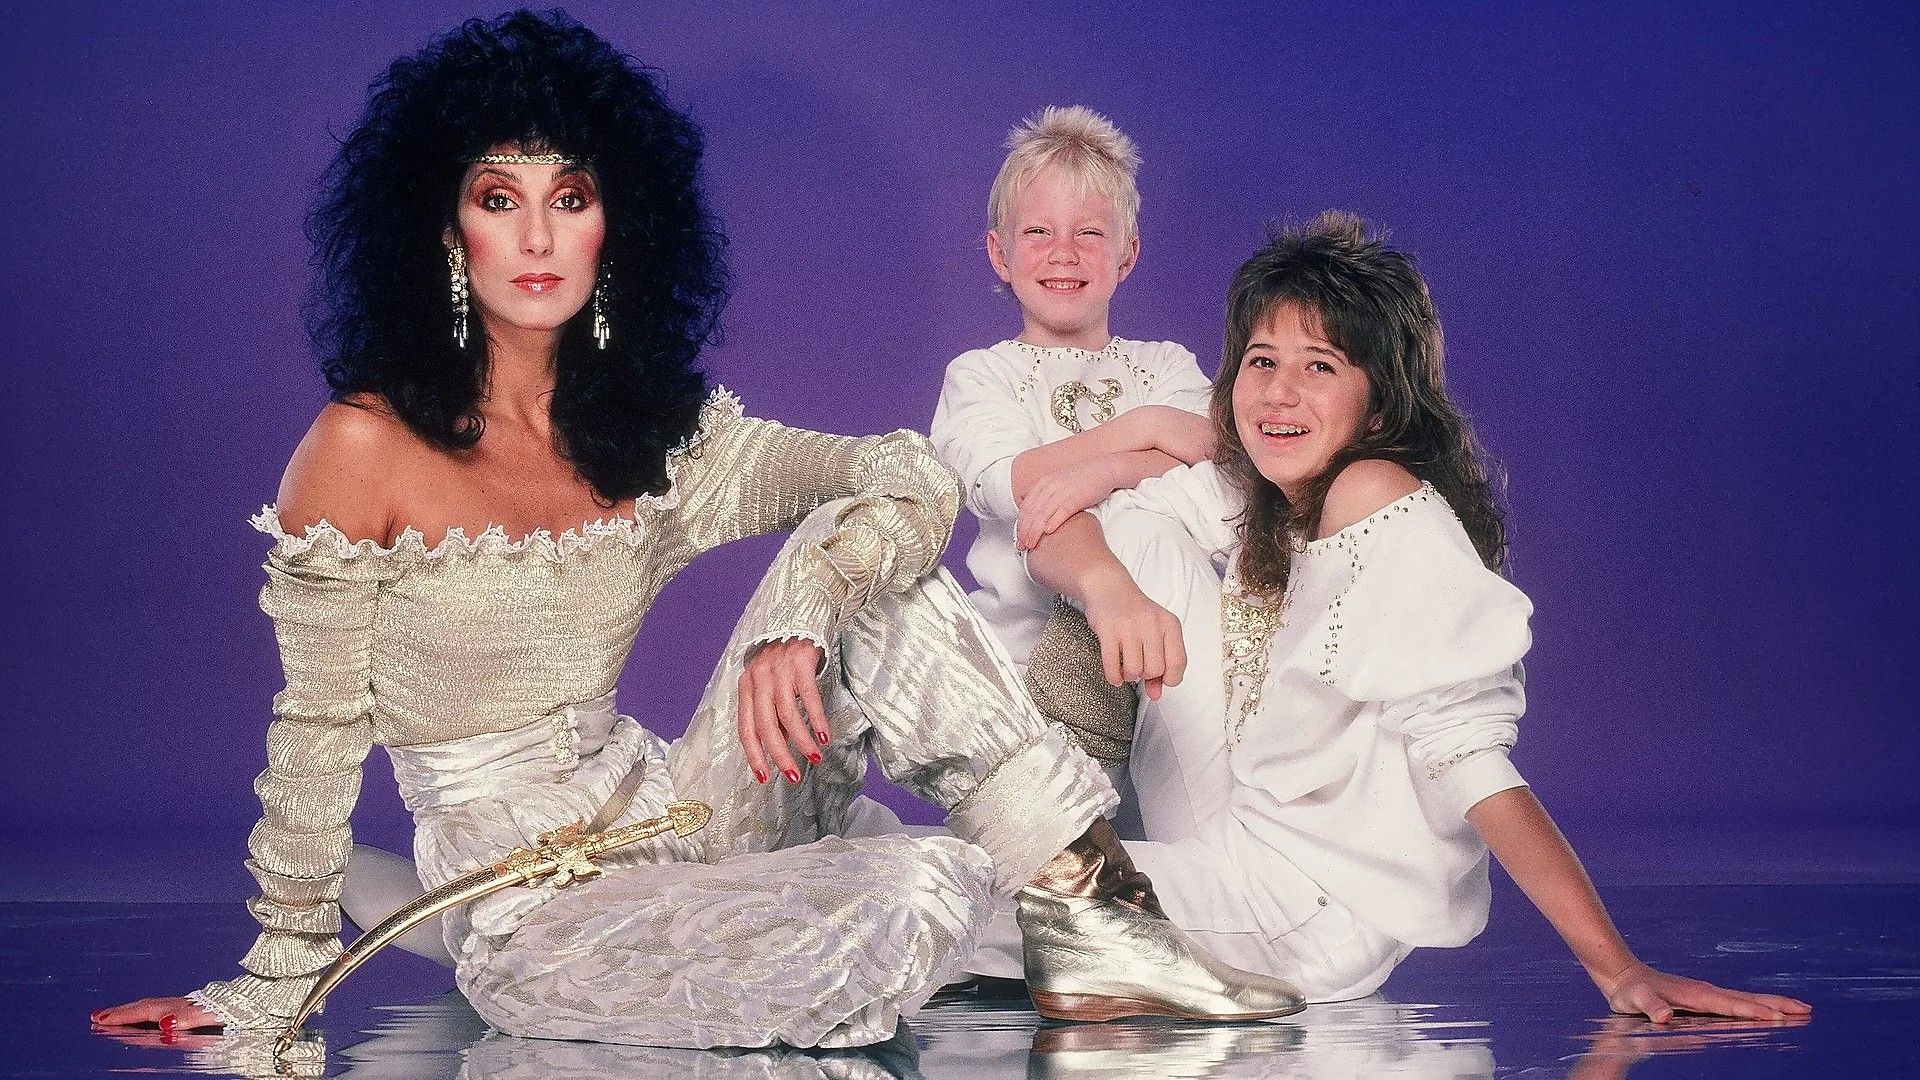 Singer Cher and her children